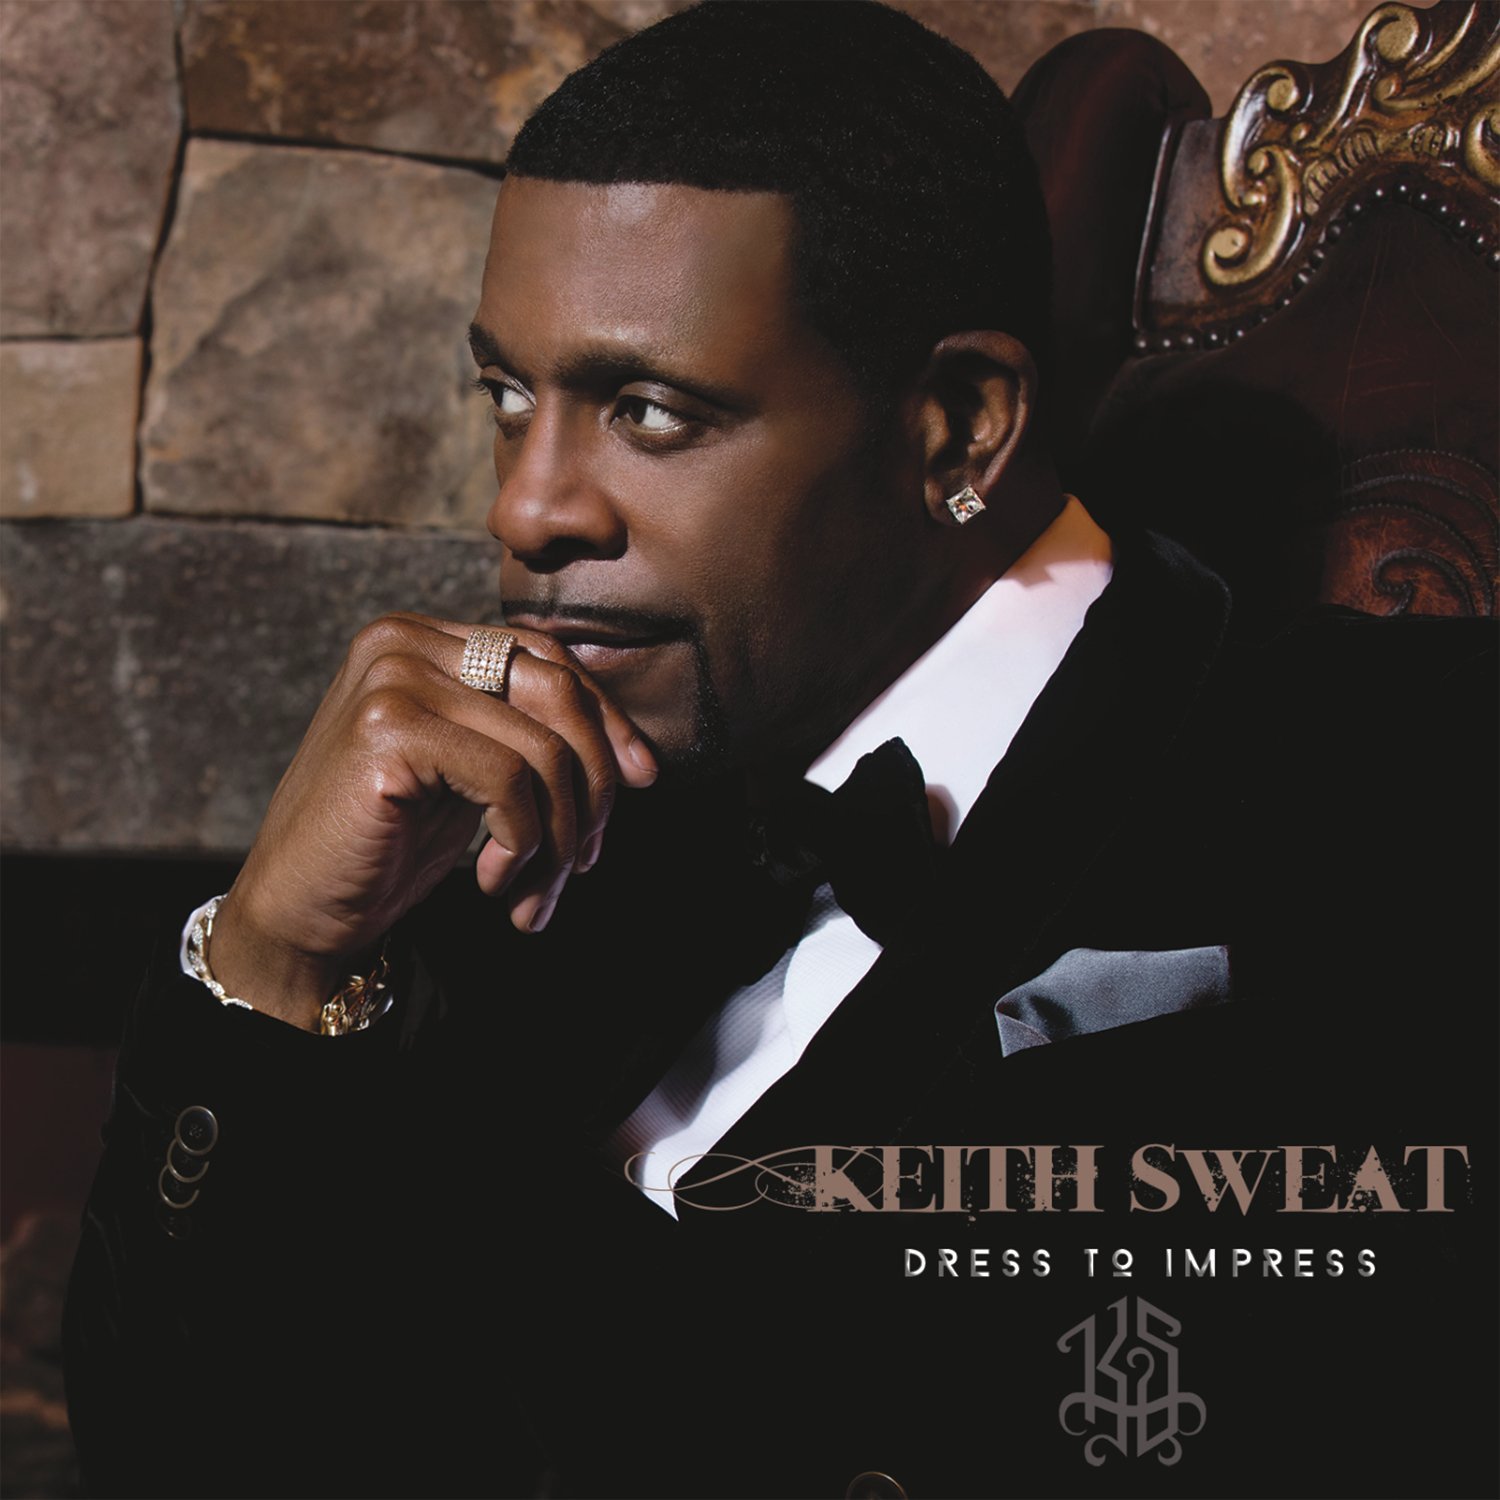 Keith sweat dress to impress album download free